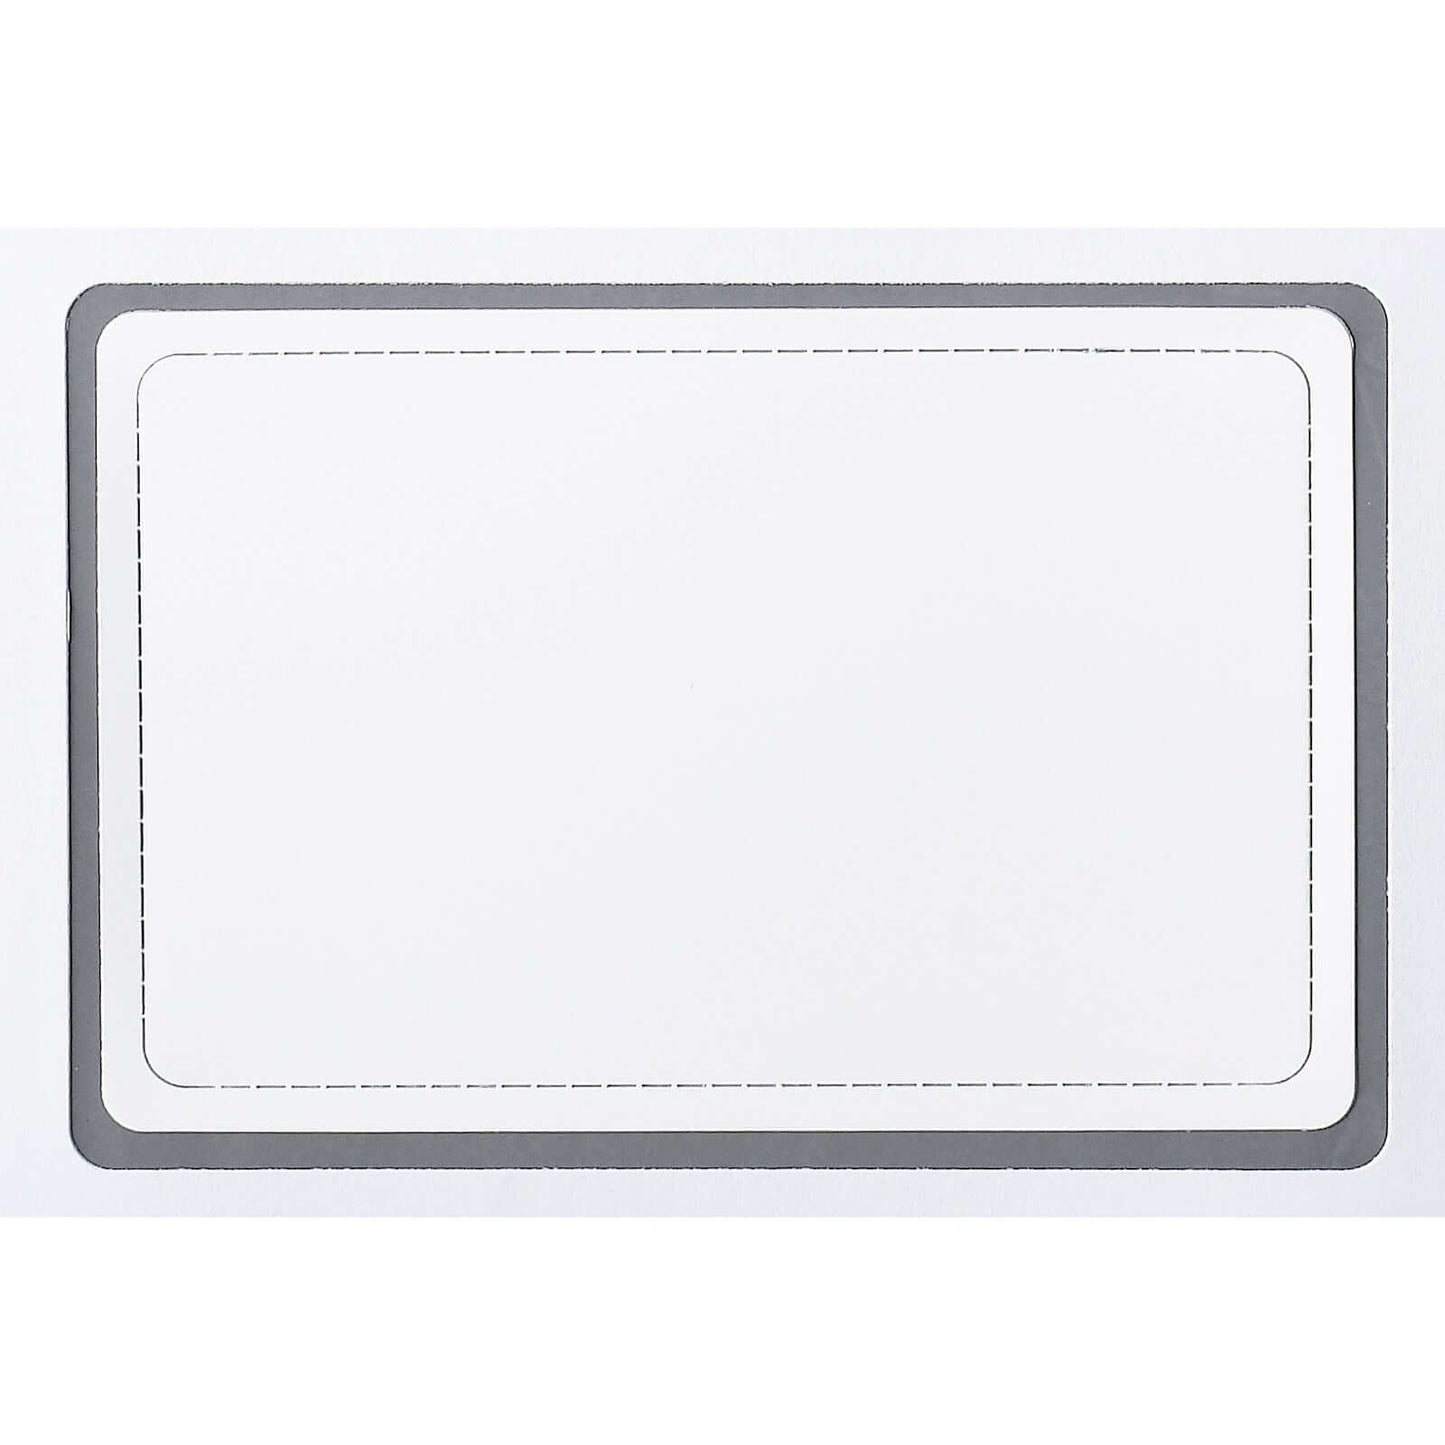 LMC1301 One 13-mil Perforated Plastic Membership ID Card Paper